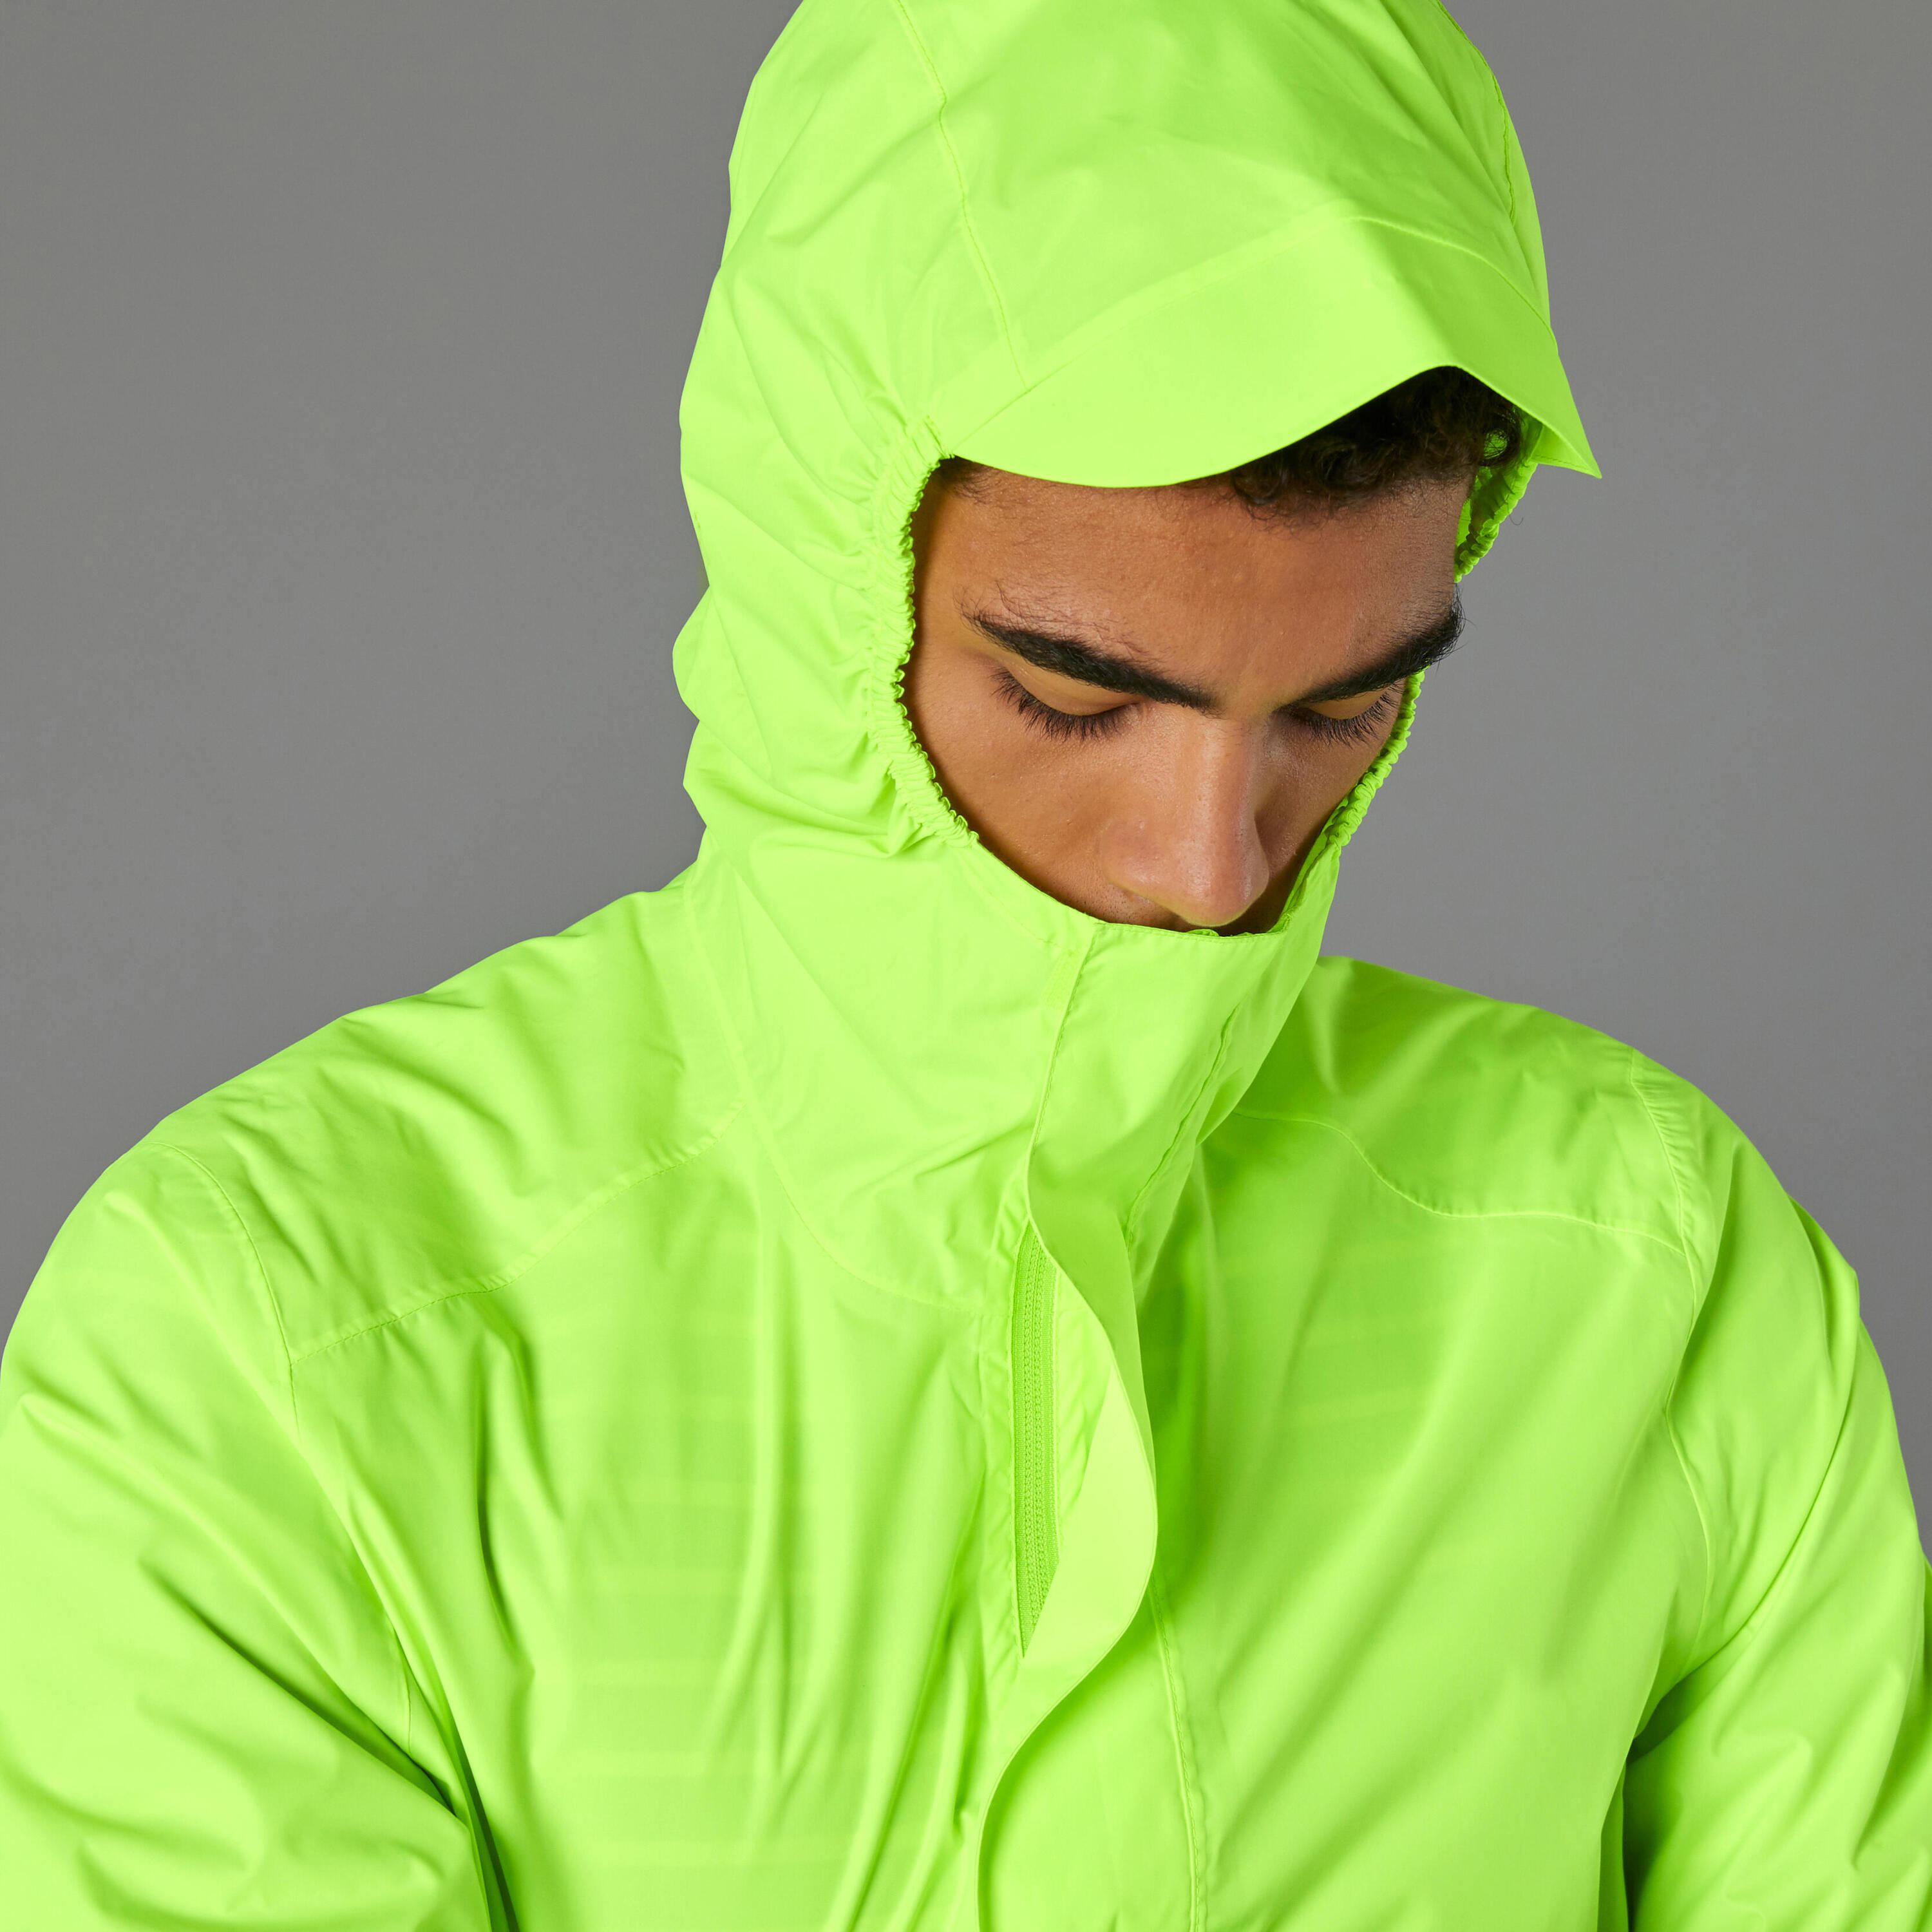 100 Men's Waterproof Urban Cycling Jacket - Neon Yellow 20/28